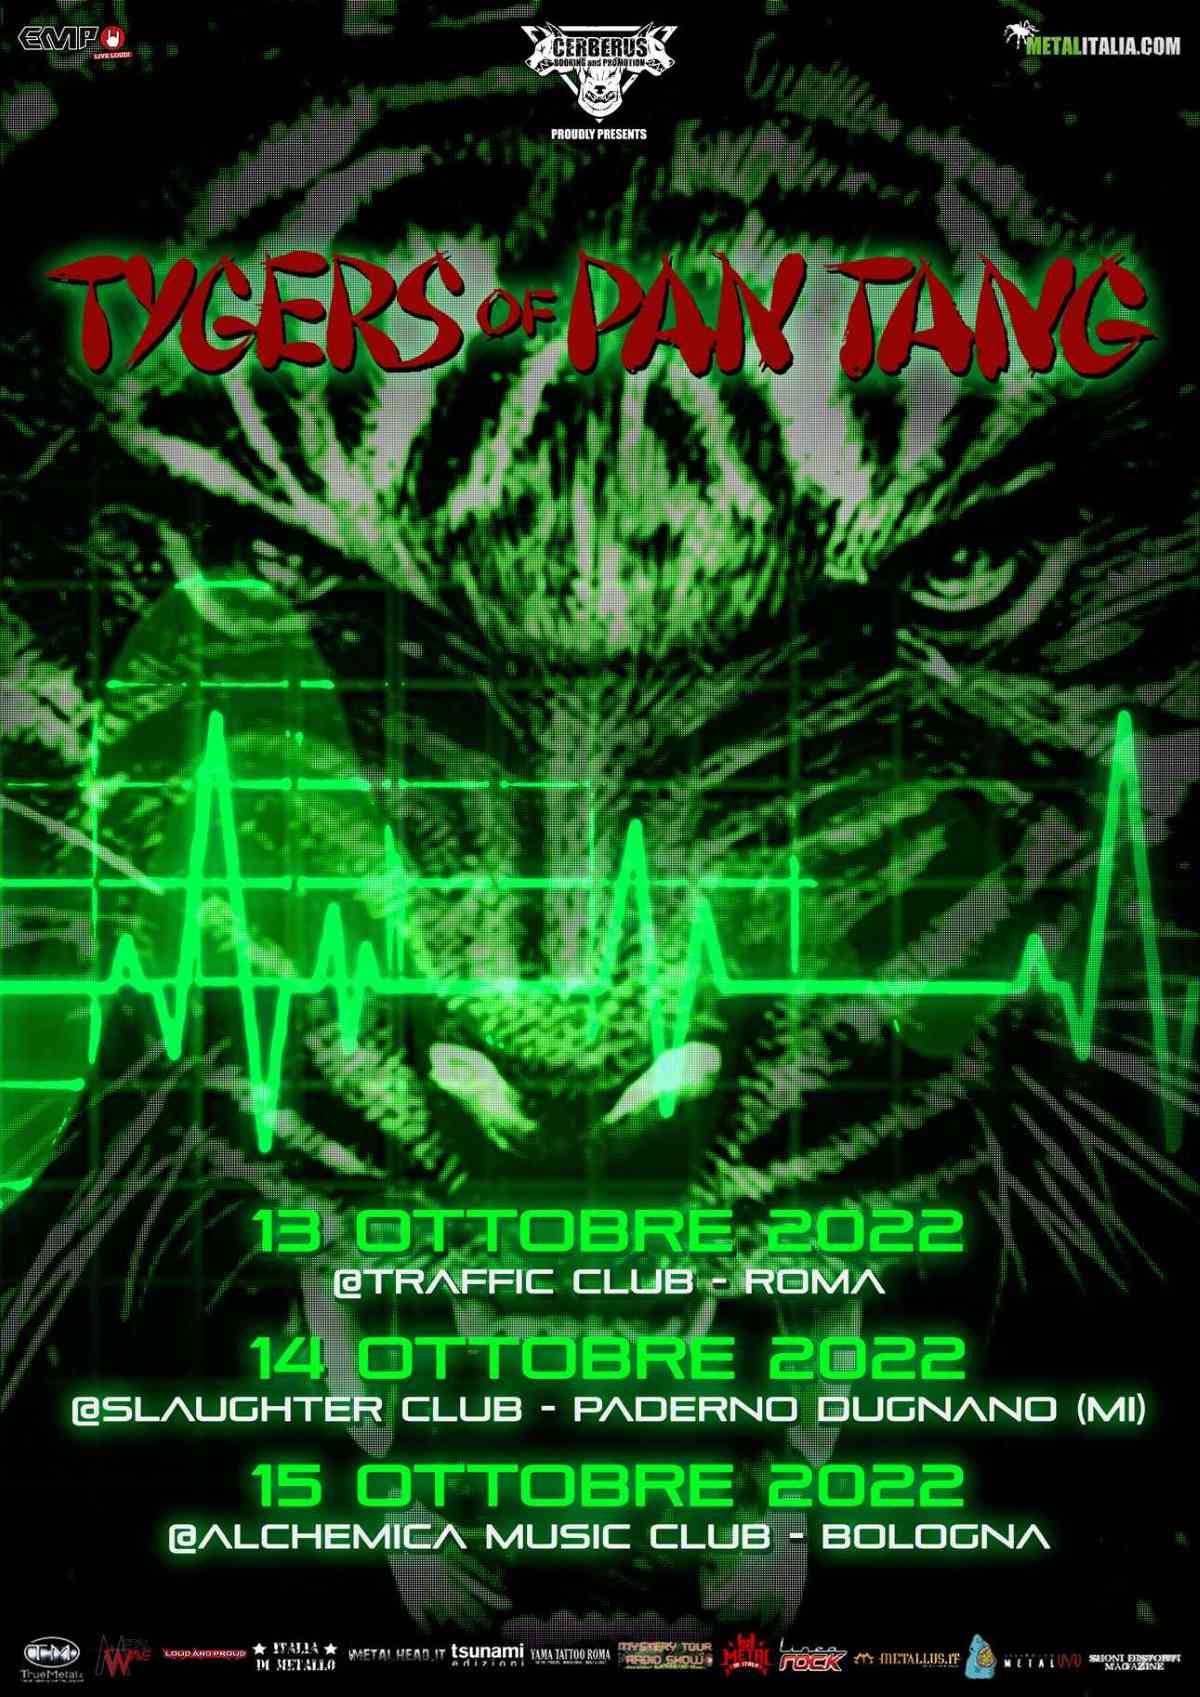 Tygers Of Pan Tang: in Italia ad ottobre per tre date